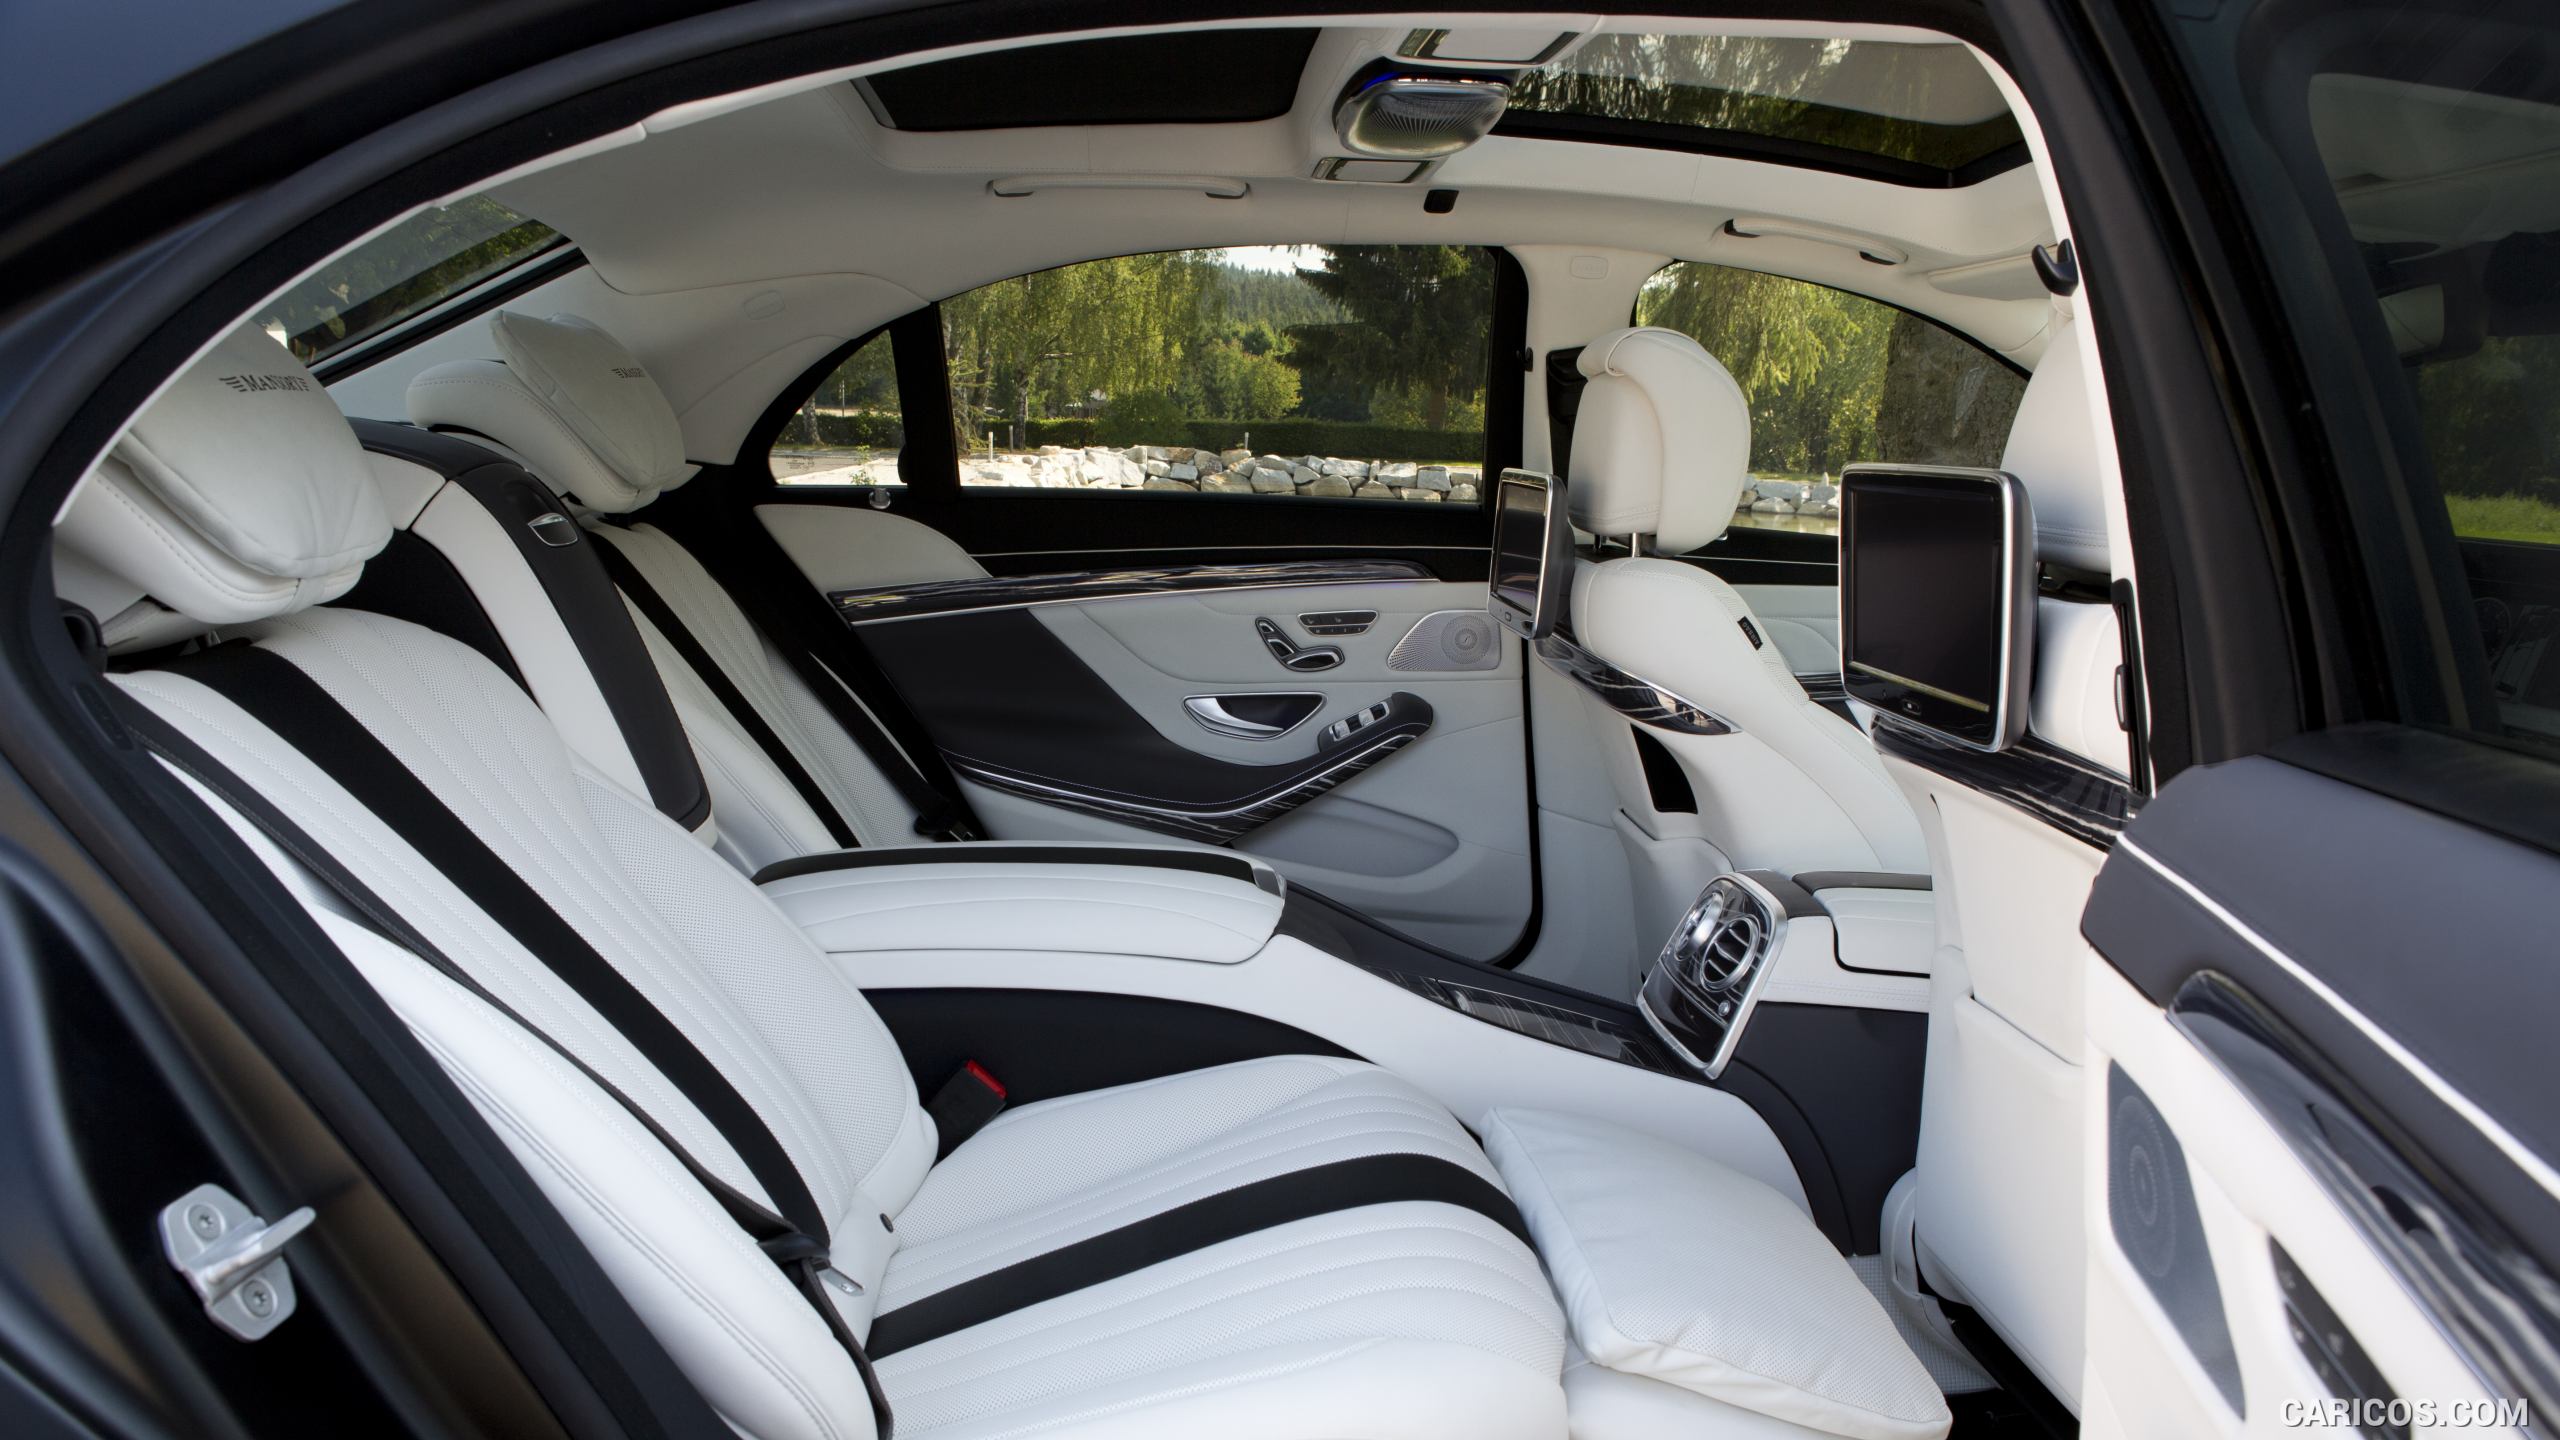 2015 MANSORY Mercedes S63 AMG Sedan Black Edition - Interior Rear Seats, #12 of 12